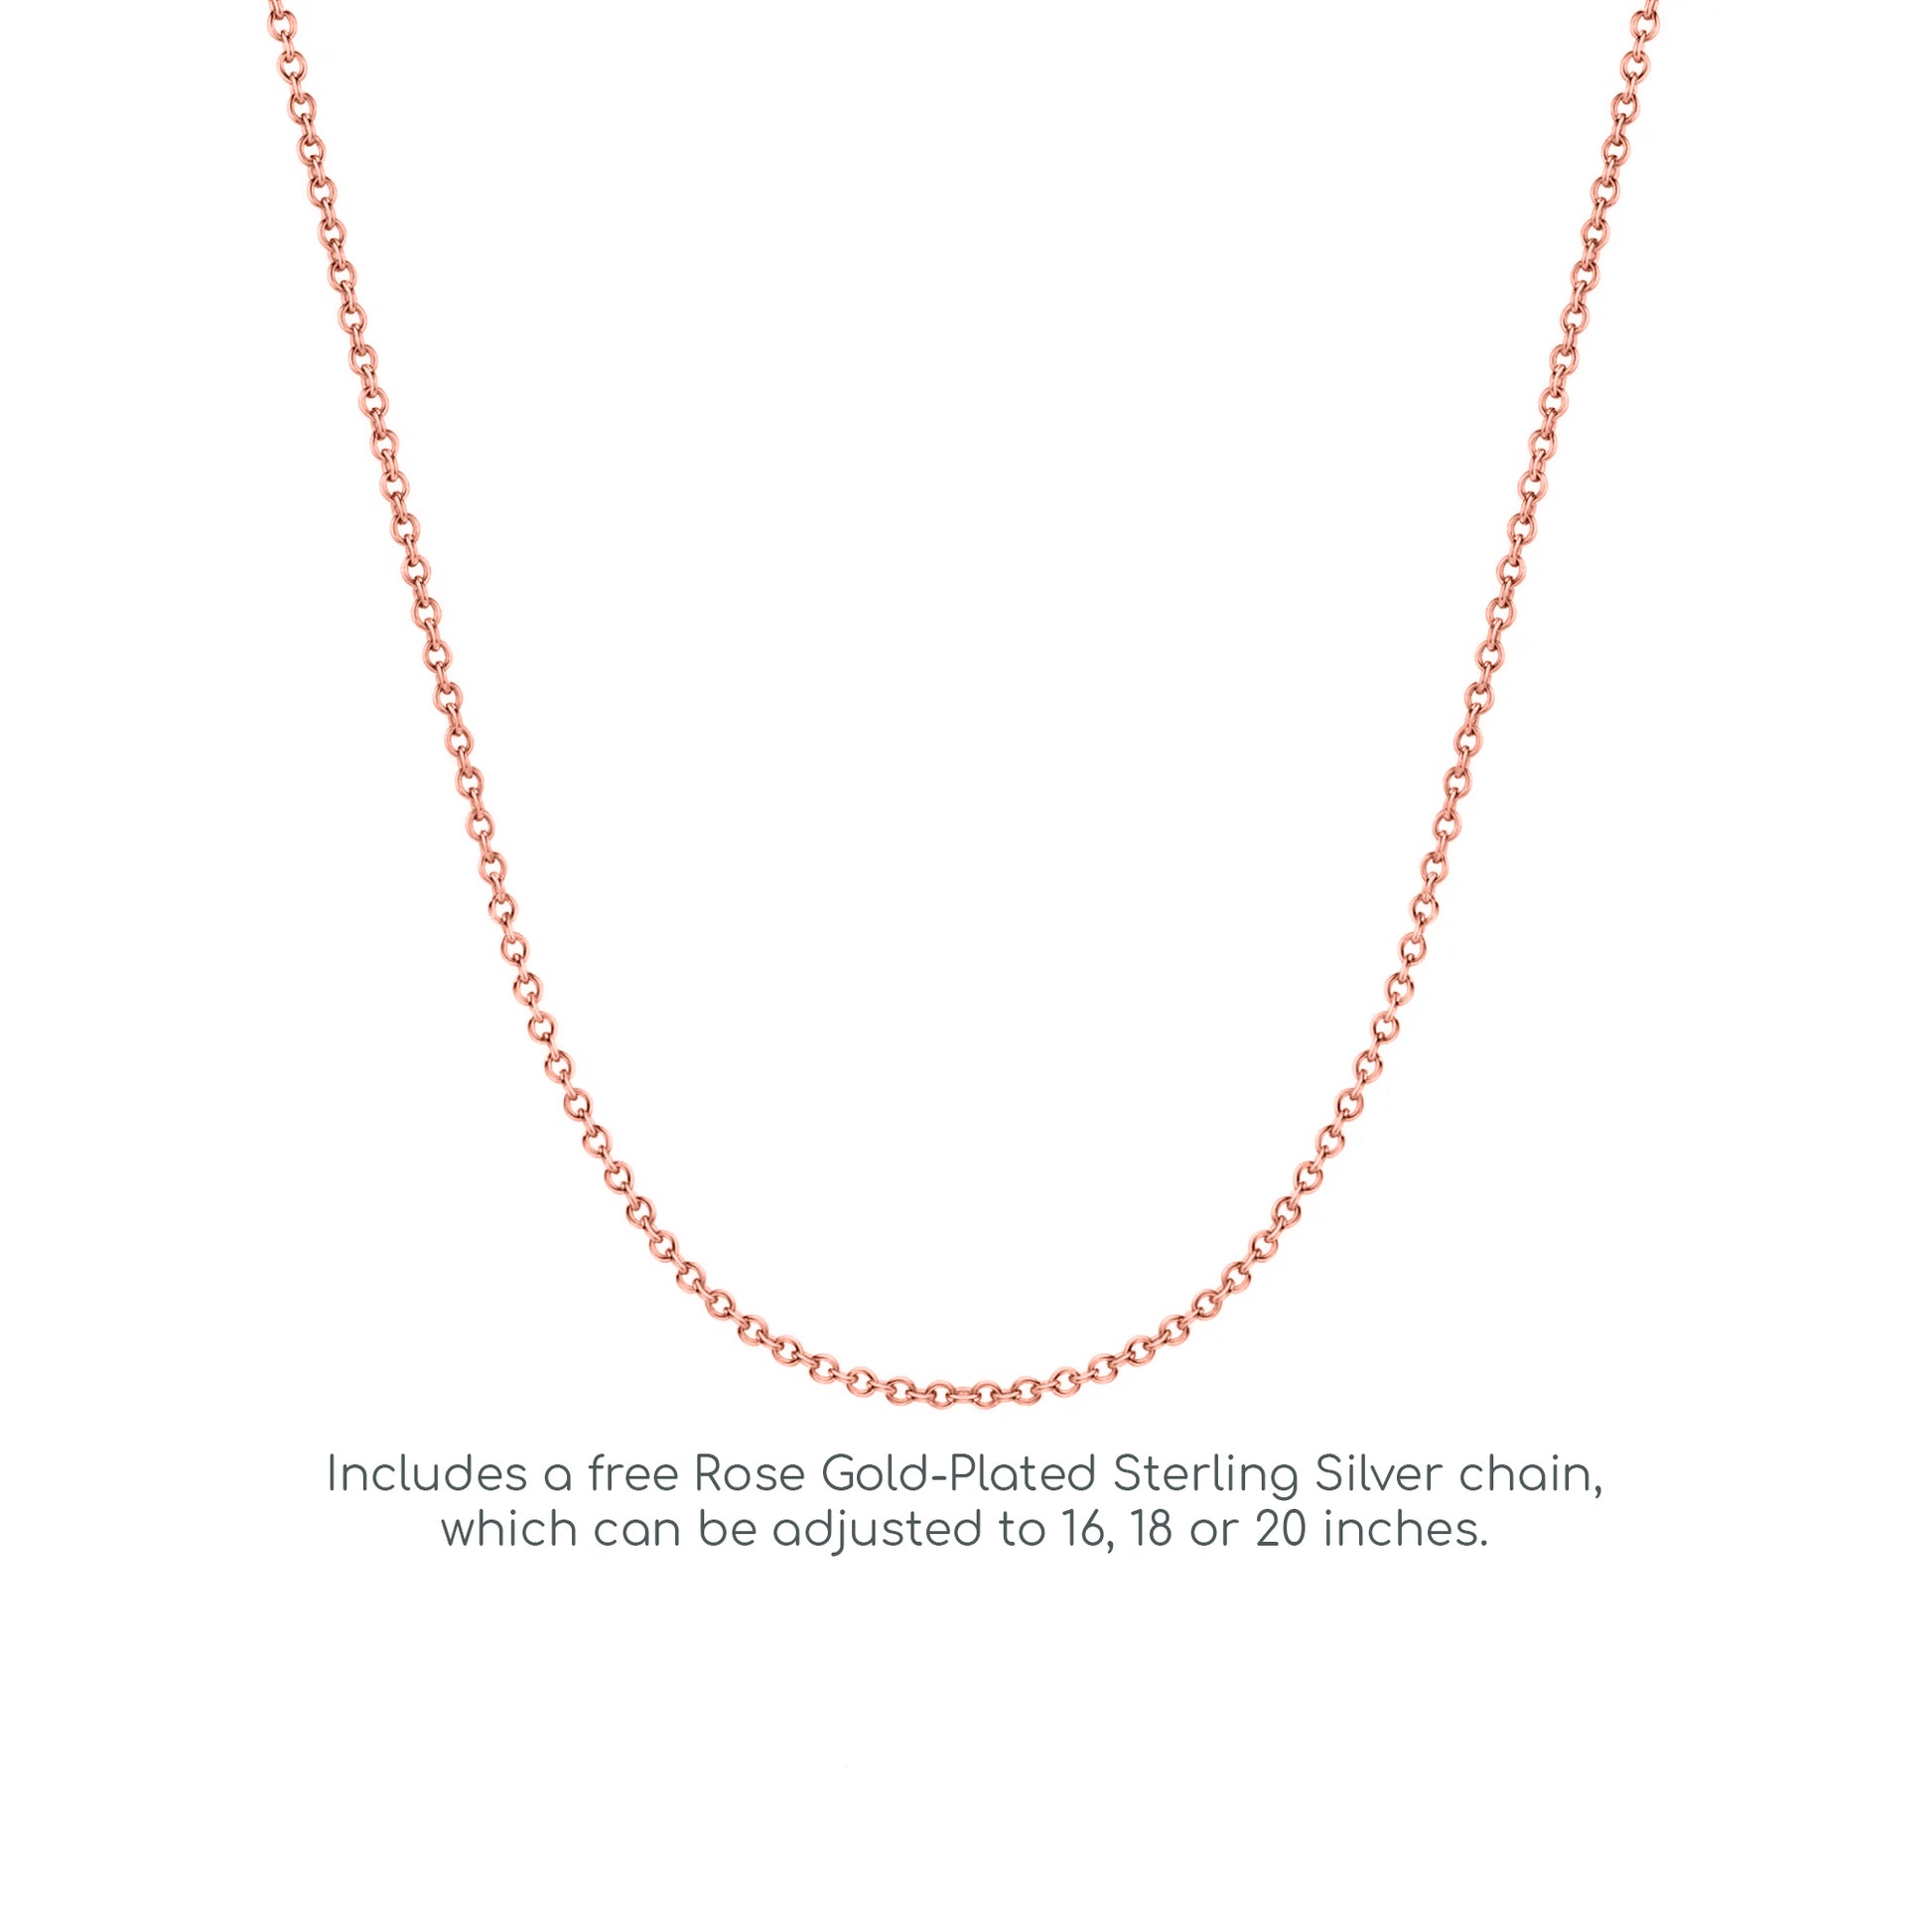 Rose Silver  princess Cut CZ Crop Circles Necklace 18 inch - GVP442